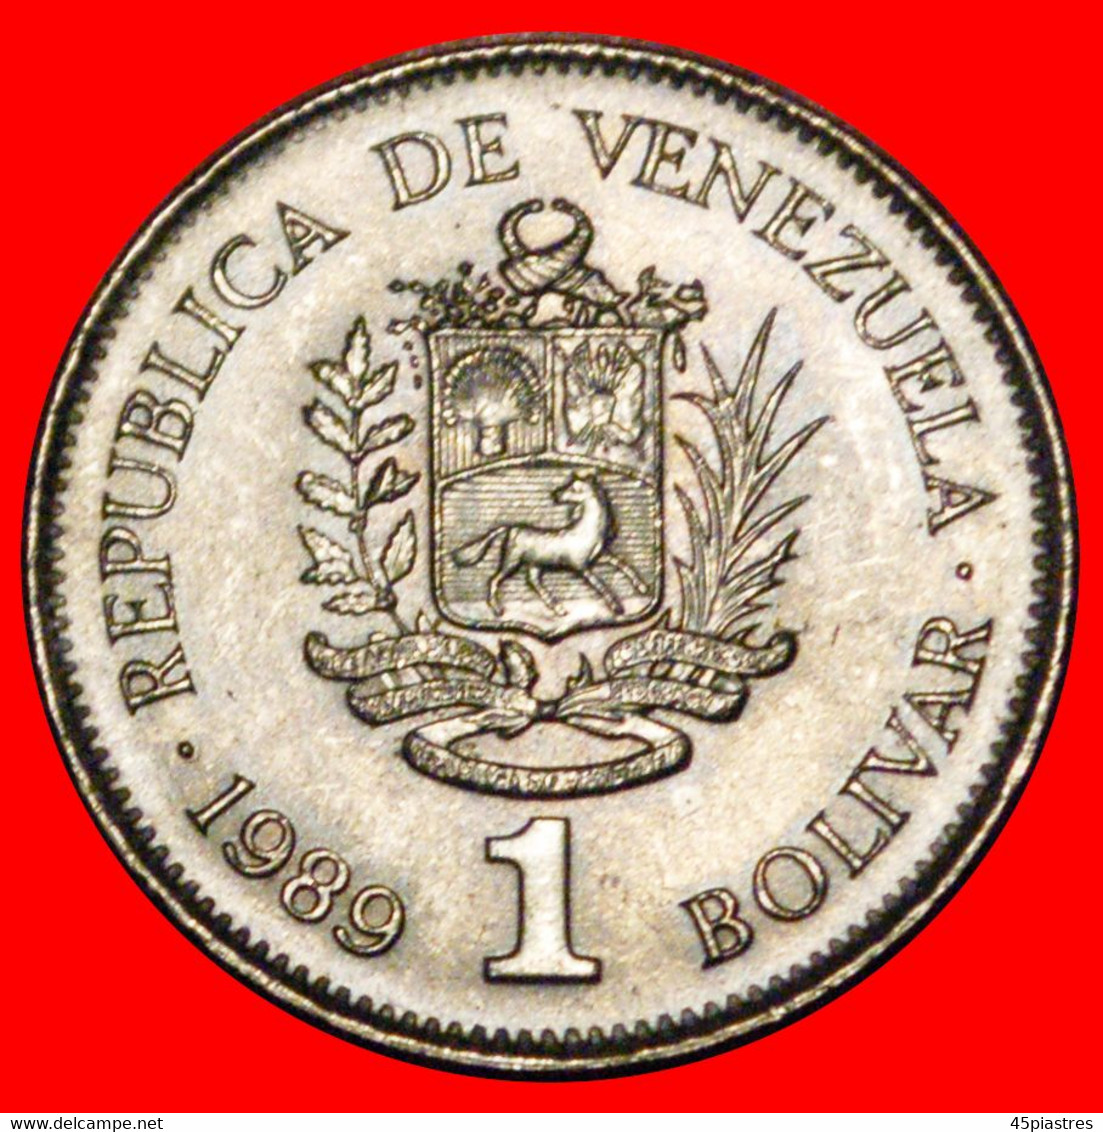 * GERMANY: VENEZUELA ★ 1 BOLIVAR 1989 UNC MINT LUSTRE! BOLIVAR (1783-1830) BOTH TYPES LOW START ★ NO RESERVE! - Venezuela